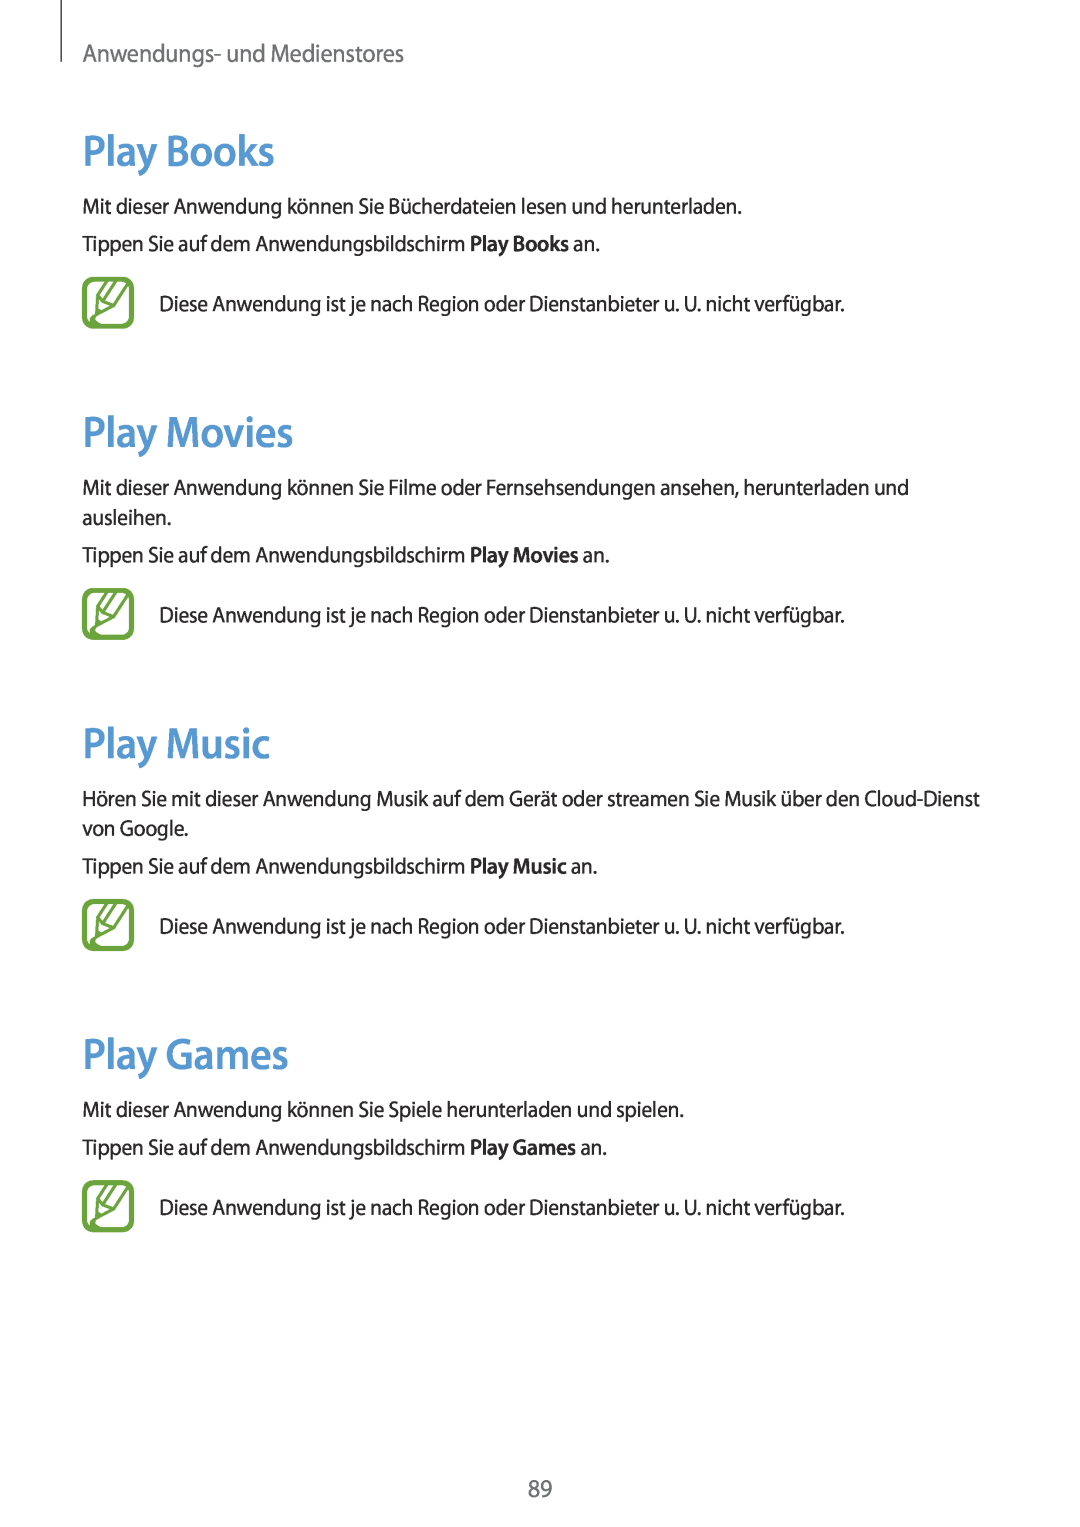 Samsung SM-T3150ZWABOG, SM-T3150ZWAVD2 manual Play Books, Play Movies, Play Music, Play Games, Anwendungs- und Medienstores 